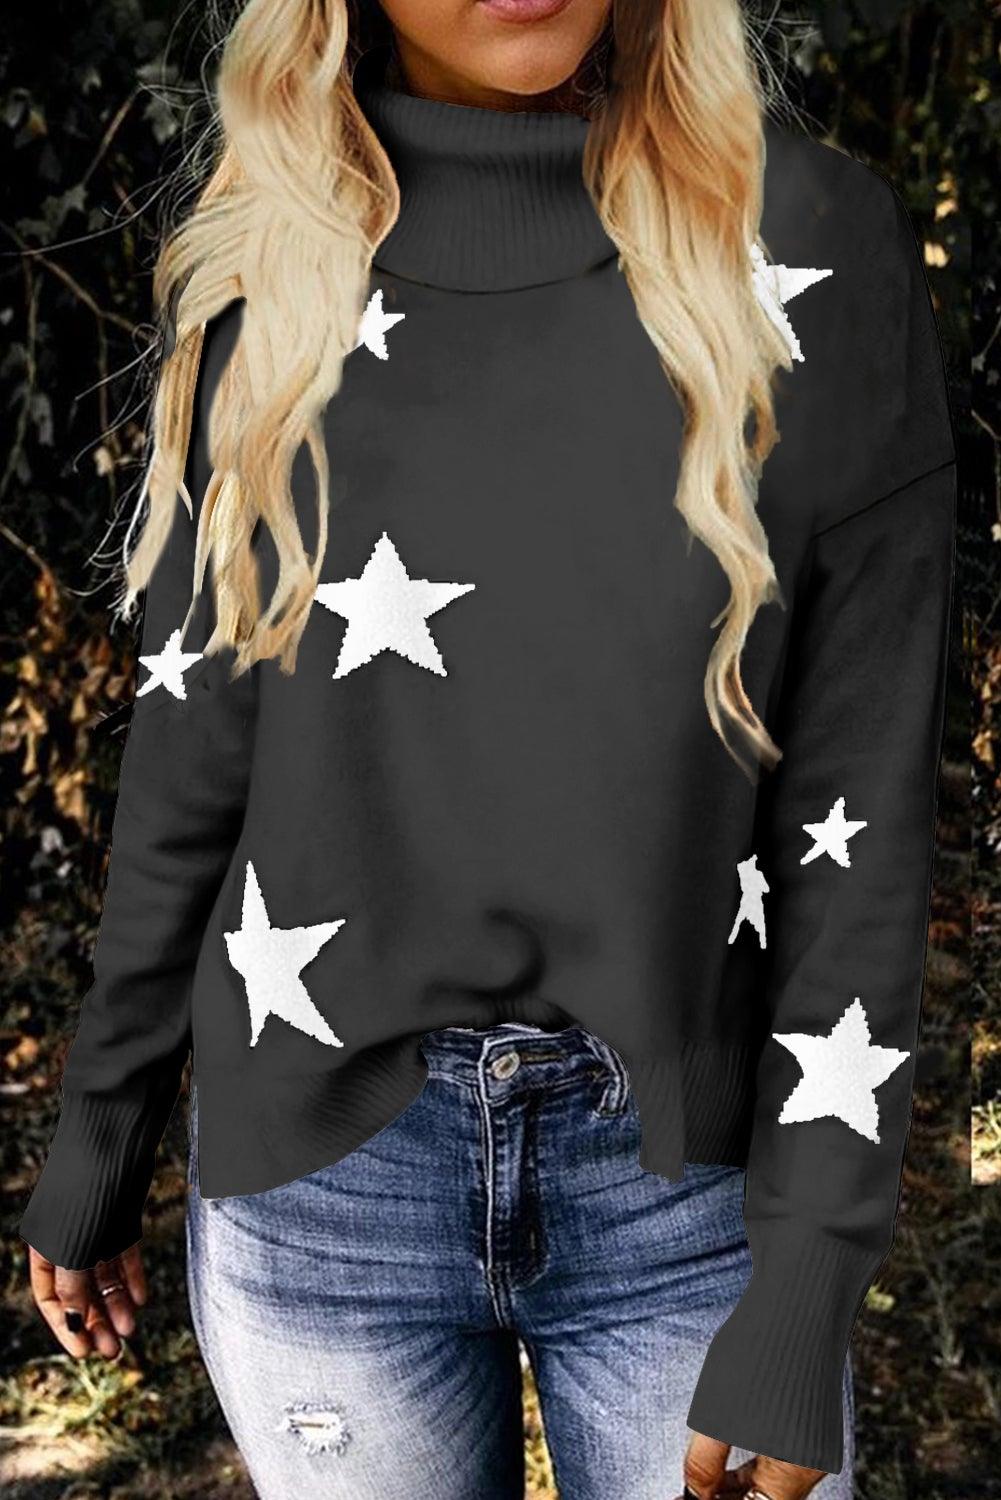 Khaki Turtleneck Dropped Sleeve Star Print Sweater - L & M Kee, LLC